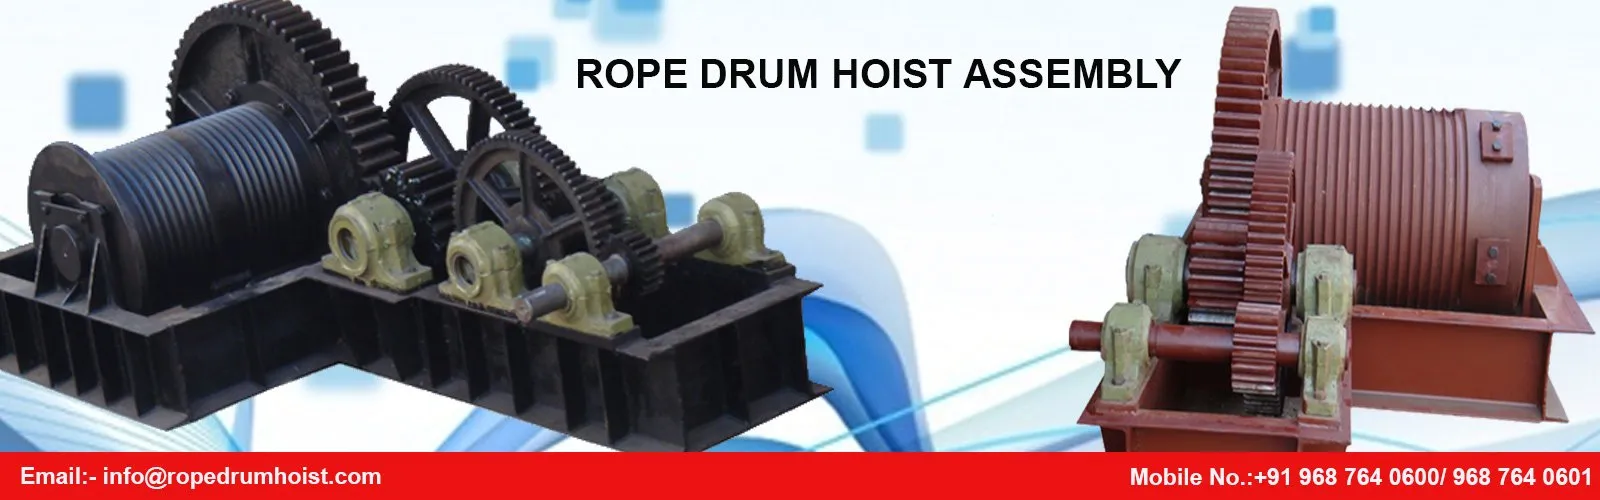 Rope Drum Hoist Manufacturer, Supplier and exporter